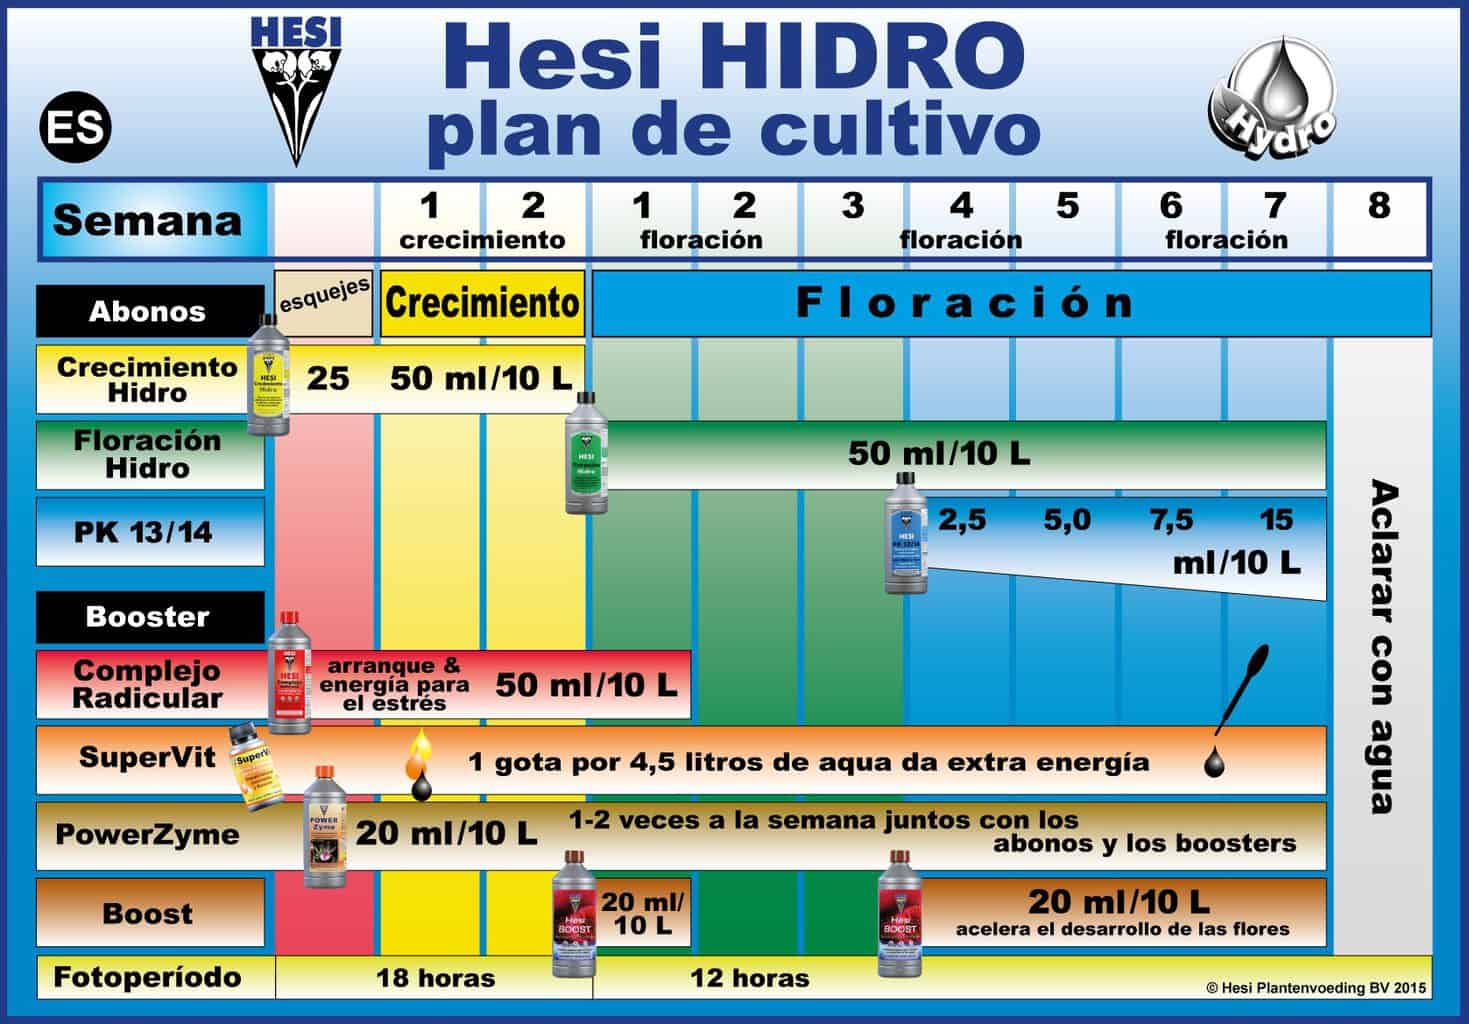 Tabla de cultivo Hesi en Hydro